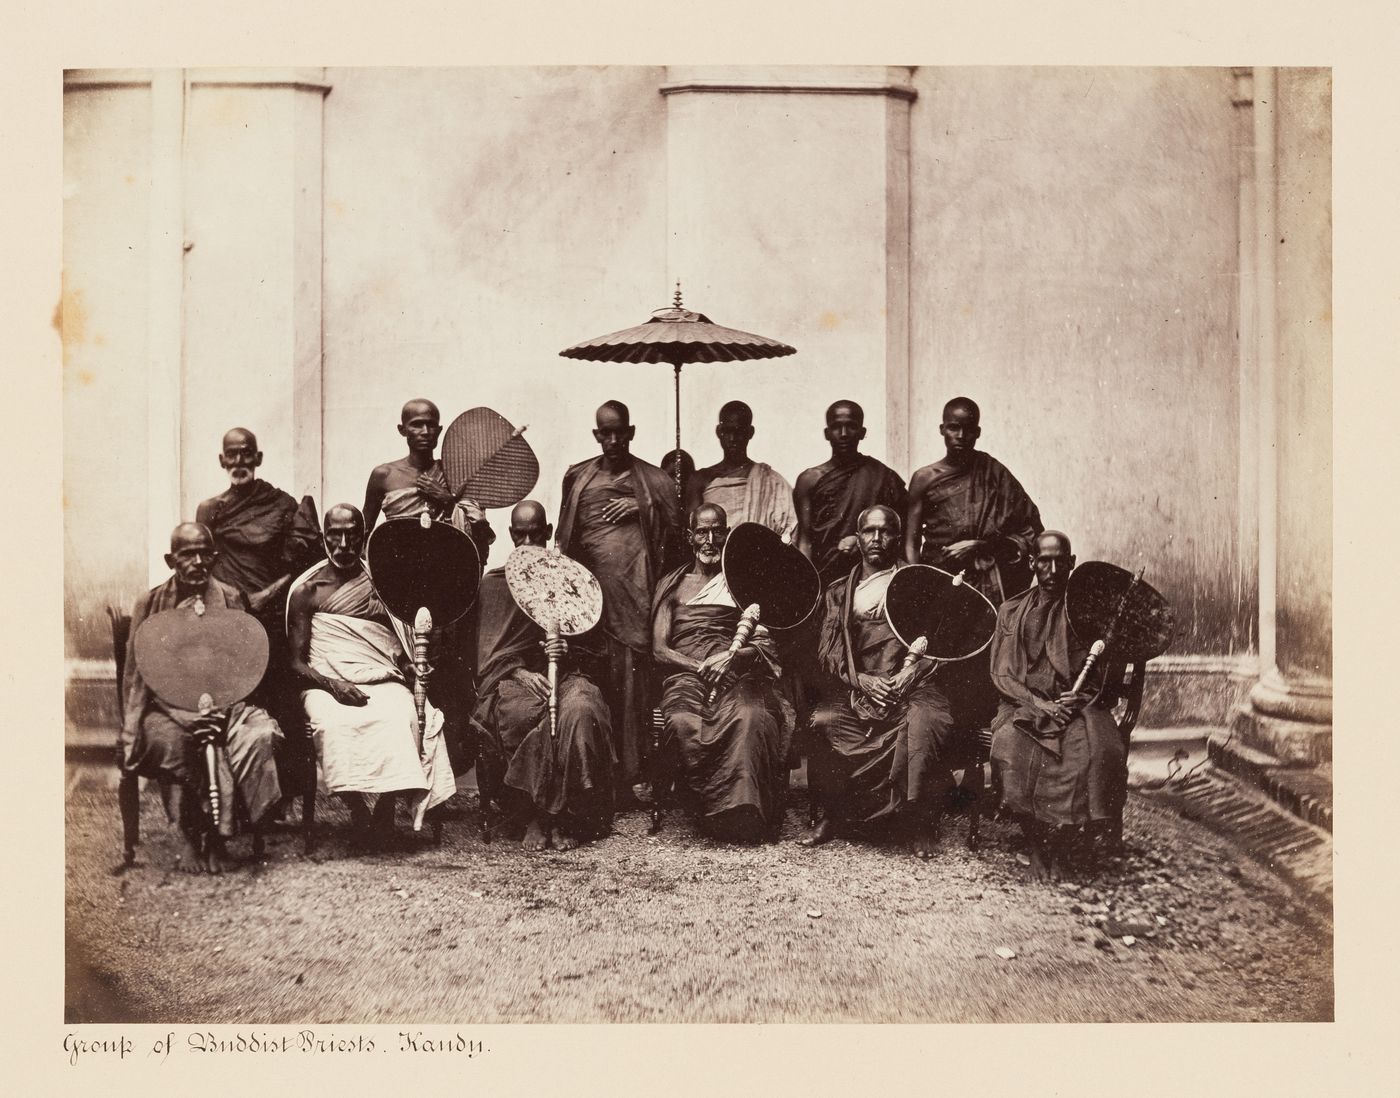 Group portrait of Buddhist priests, Kandy, Ceylon (now Sri Lanka)